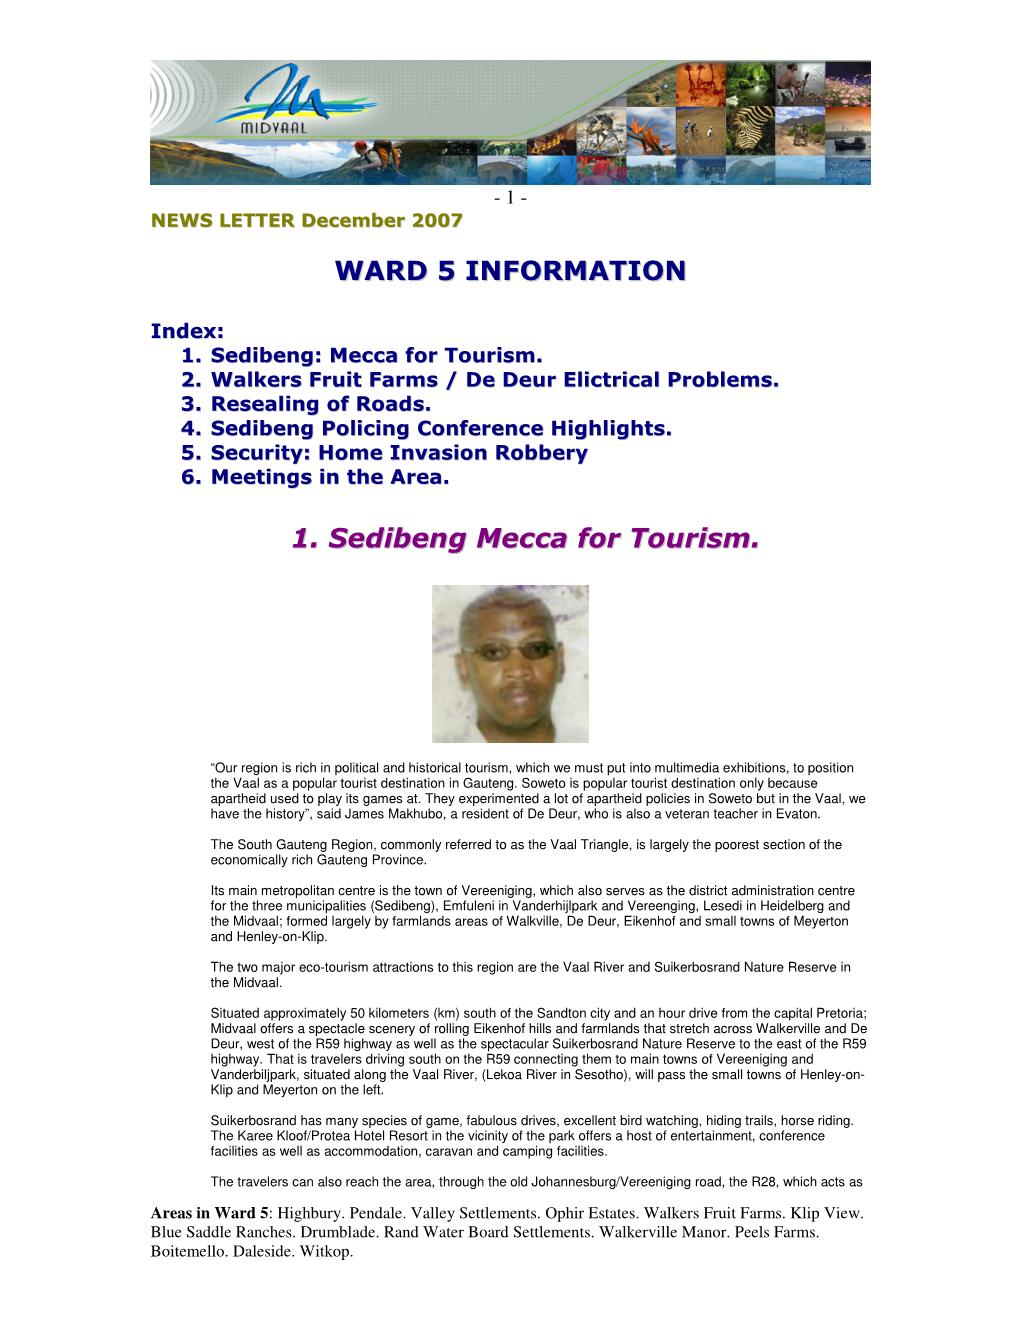 WARD 5 INFORMATION 1. Sedibeng Mecca for Tourism